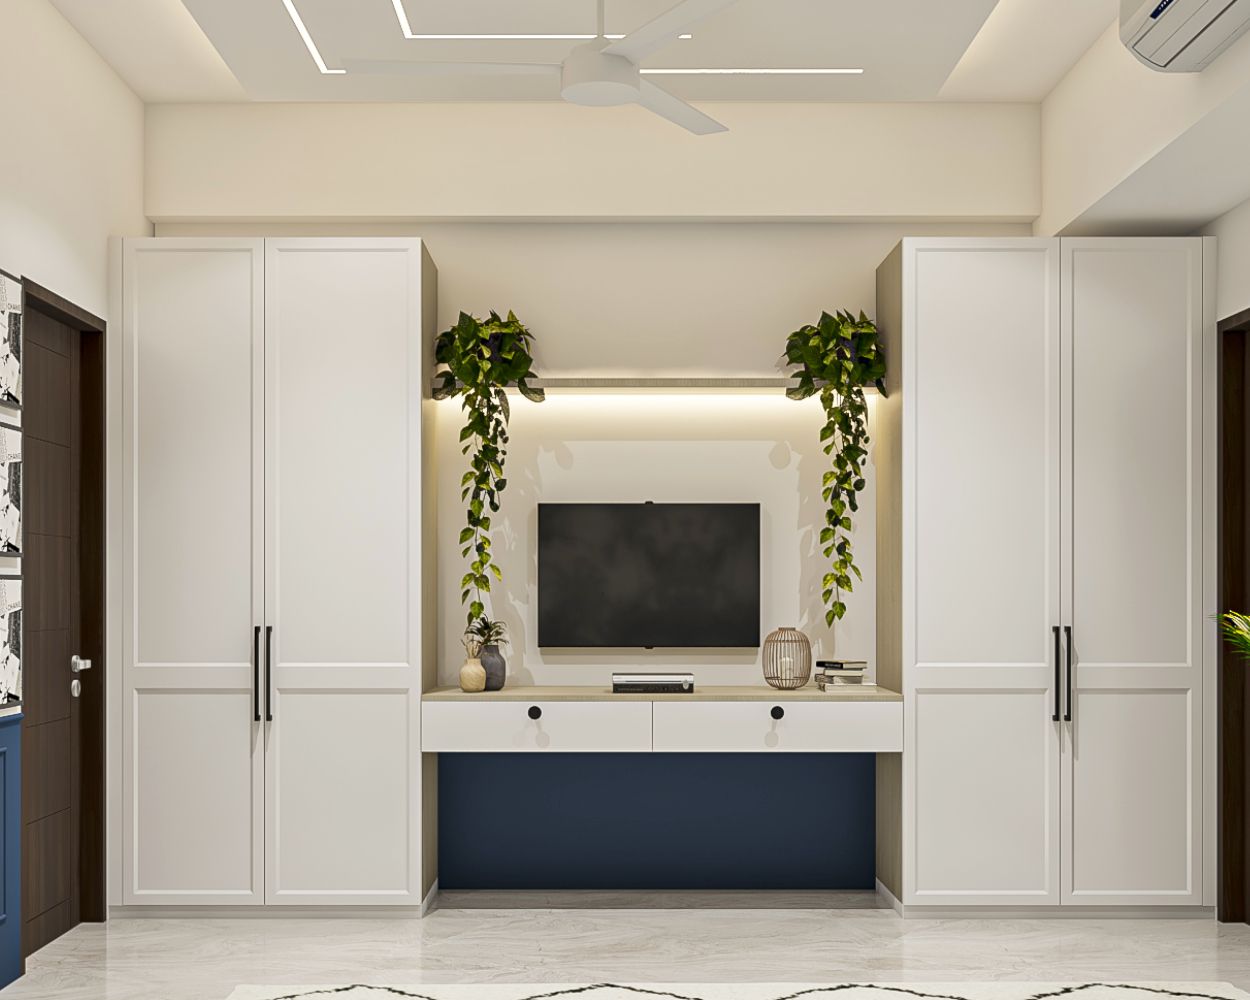 Scandinavian 4-Door White Swing Wardrobe Design With Integrated Wall-Mounted TV Unit